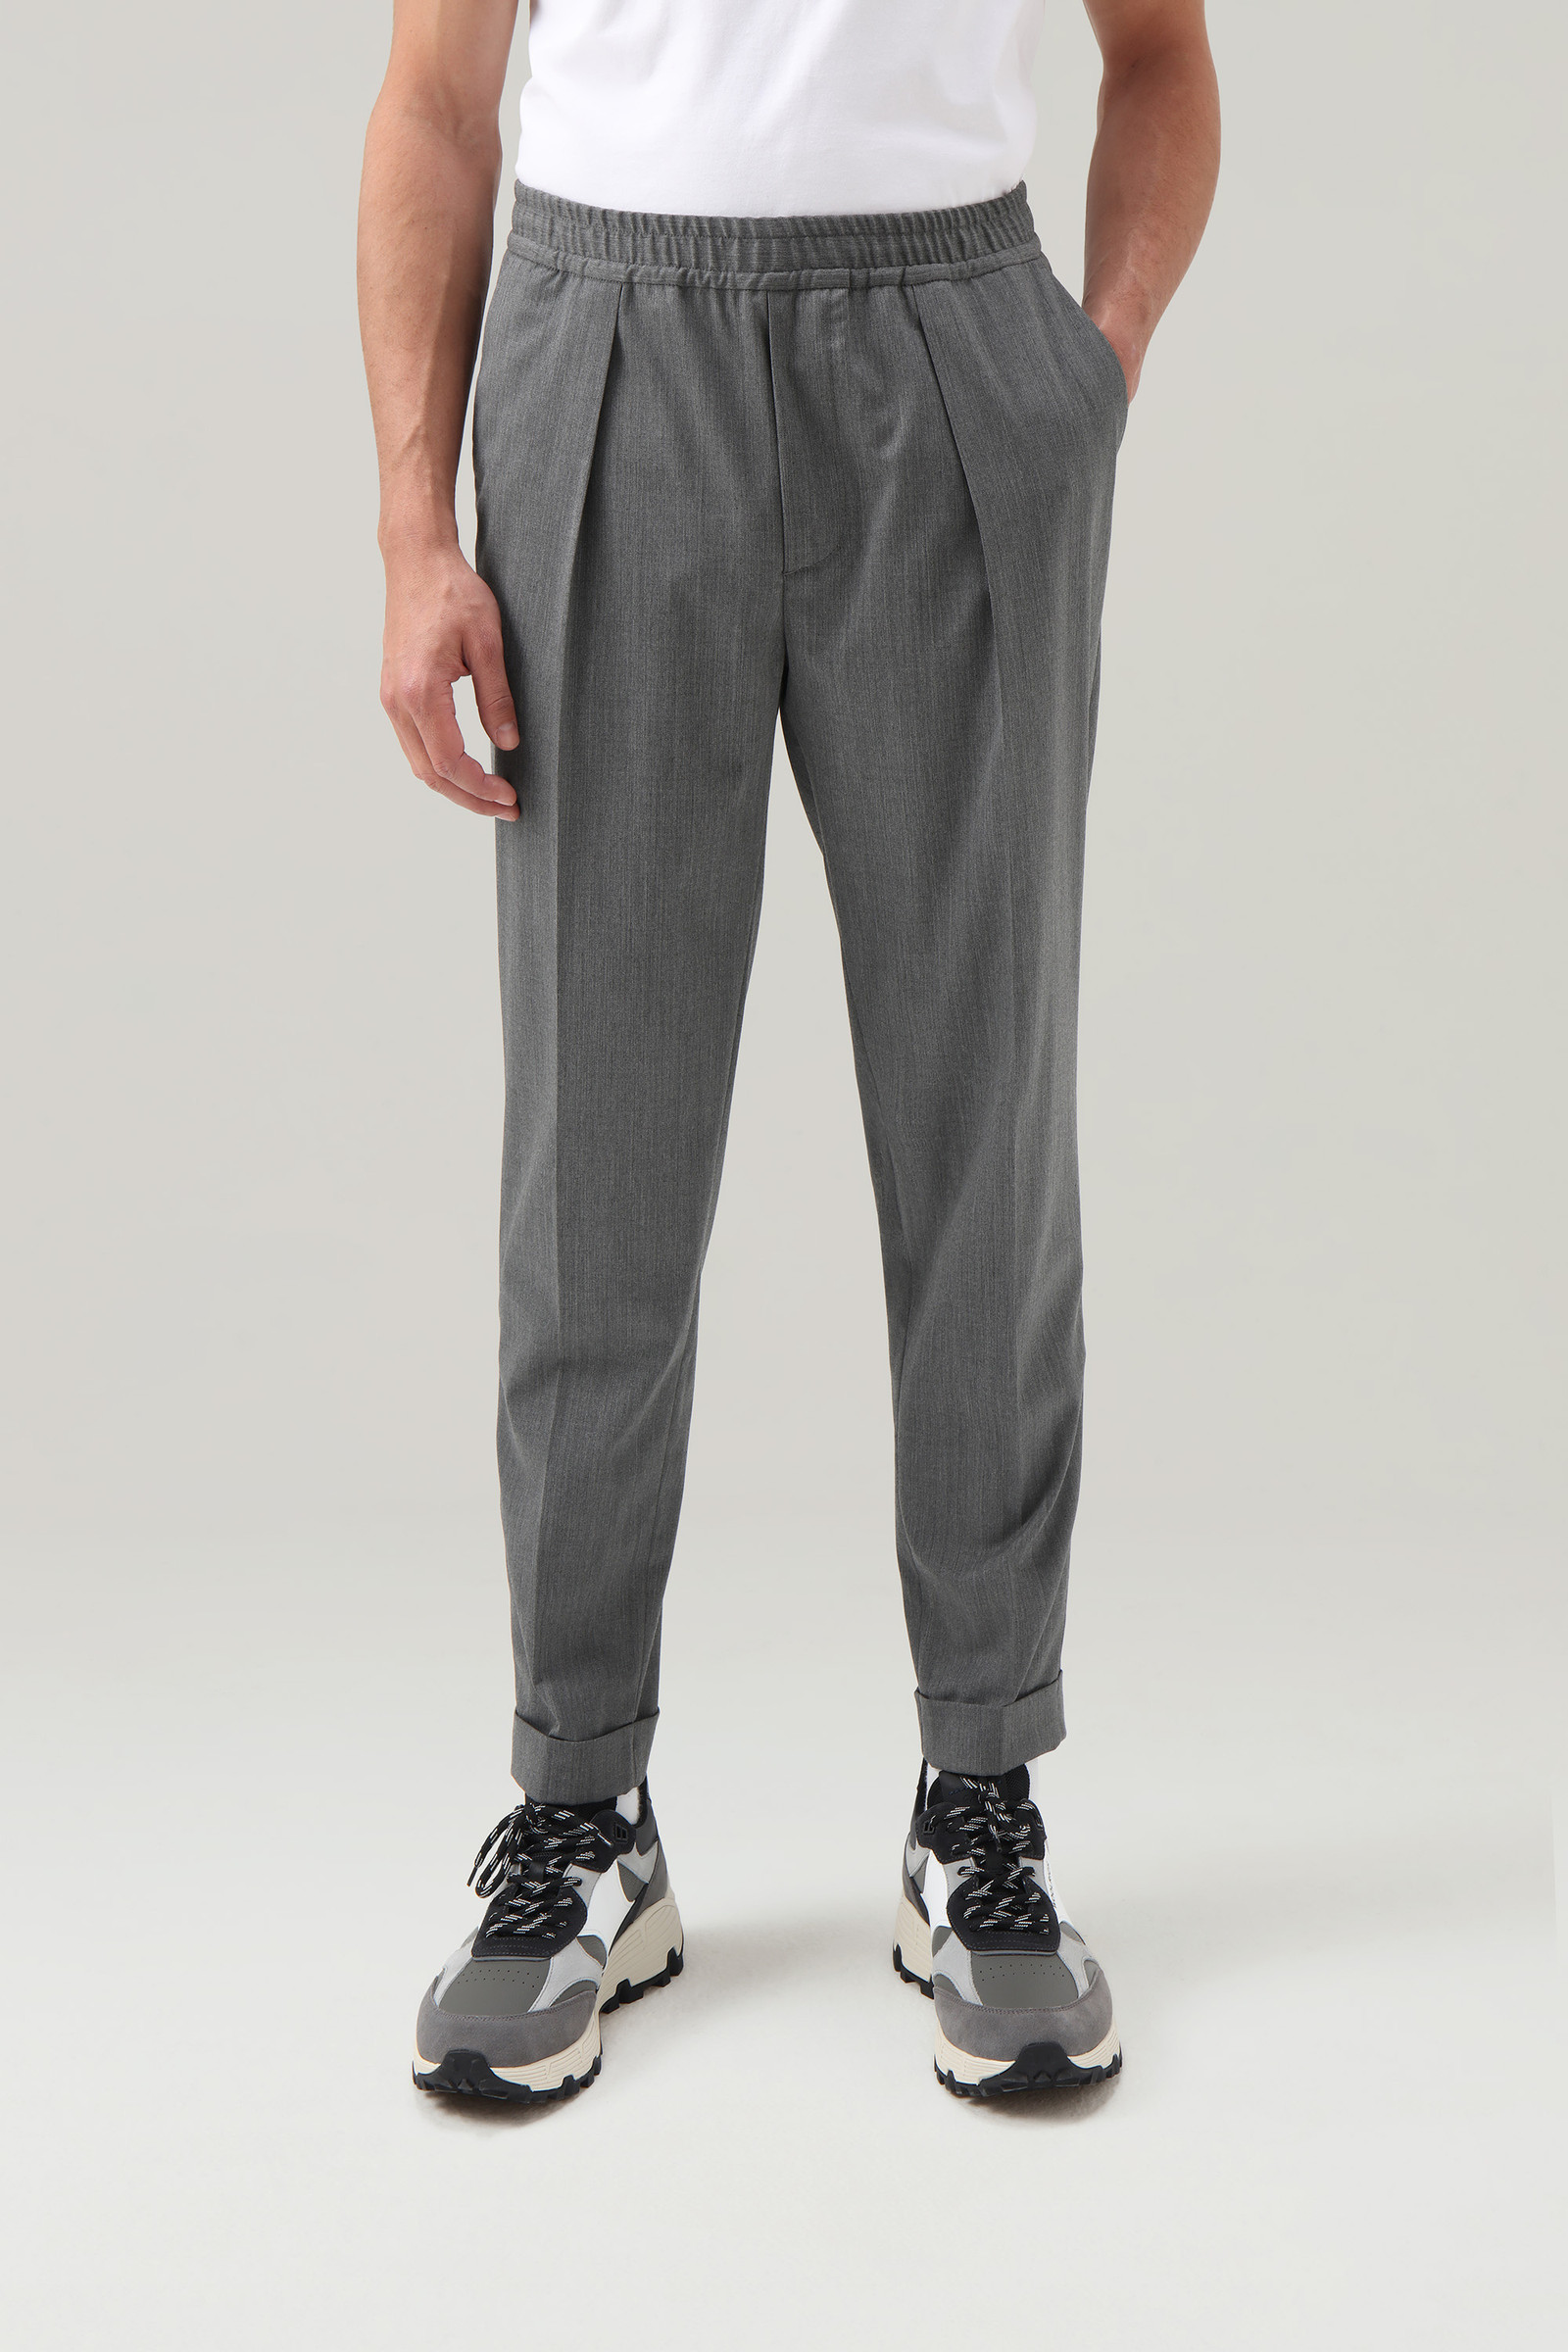 Men's Commuting Pants in Eco-Comfort Wool Blend Grey | Woolrich USA